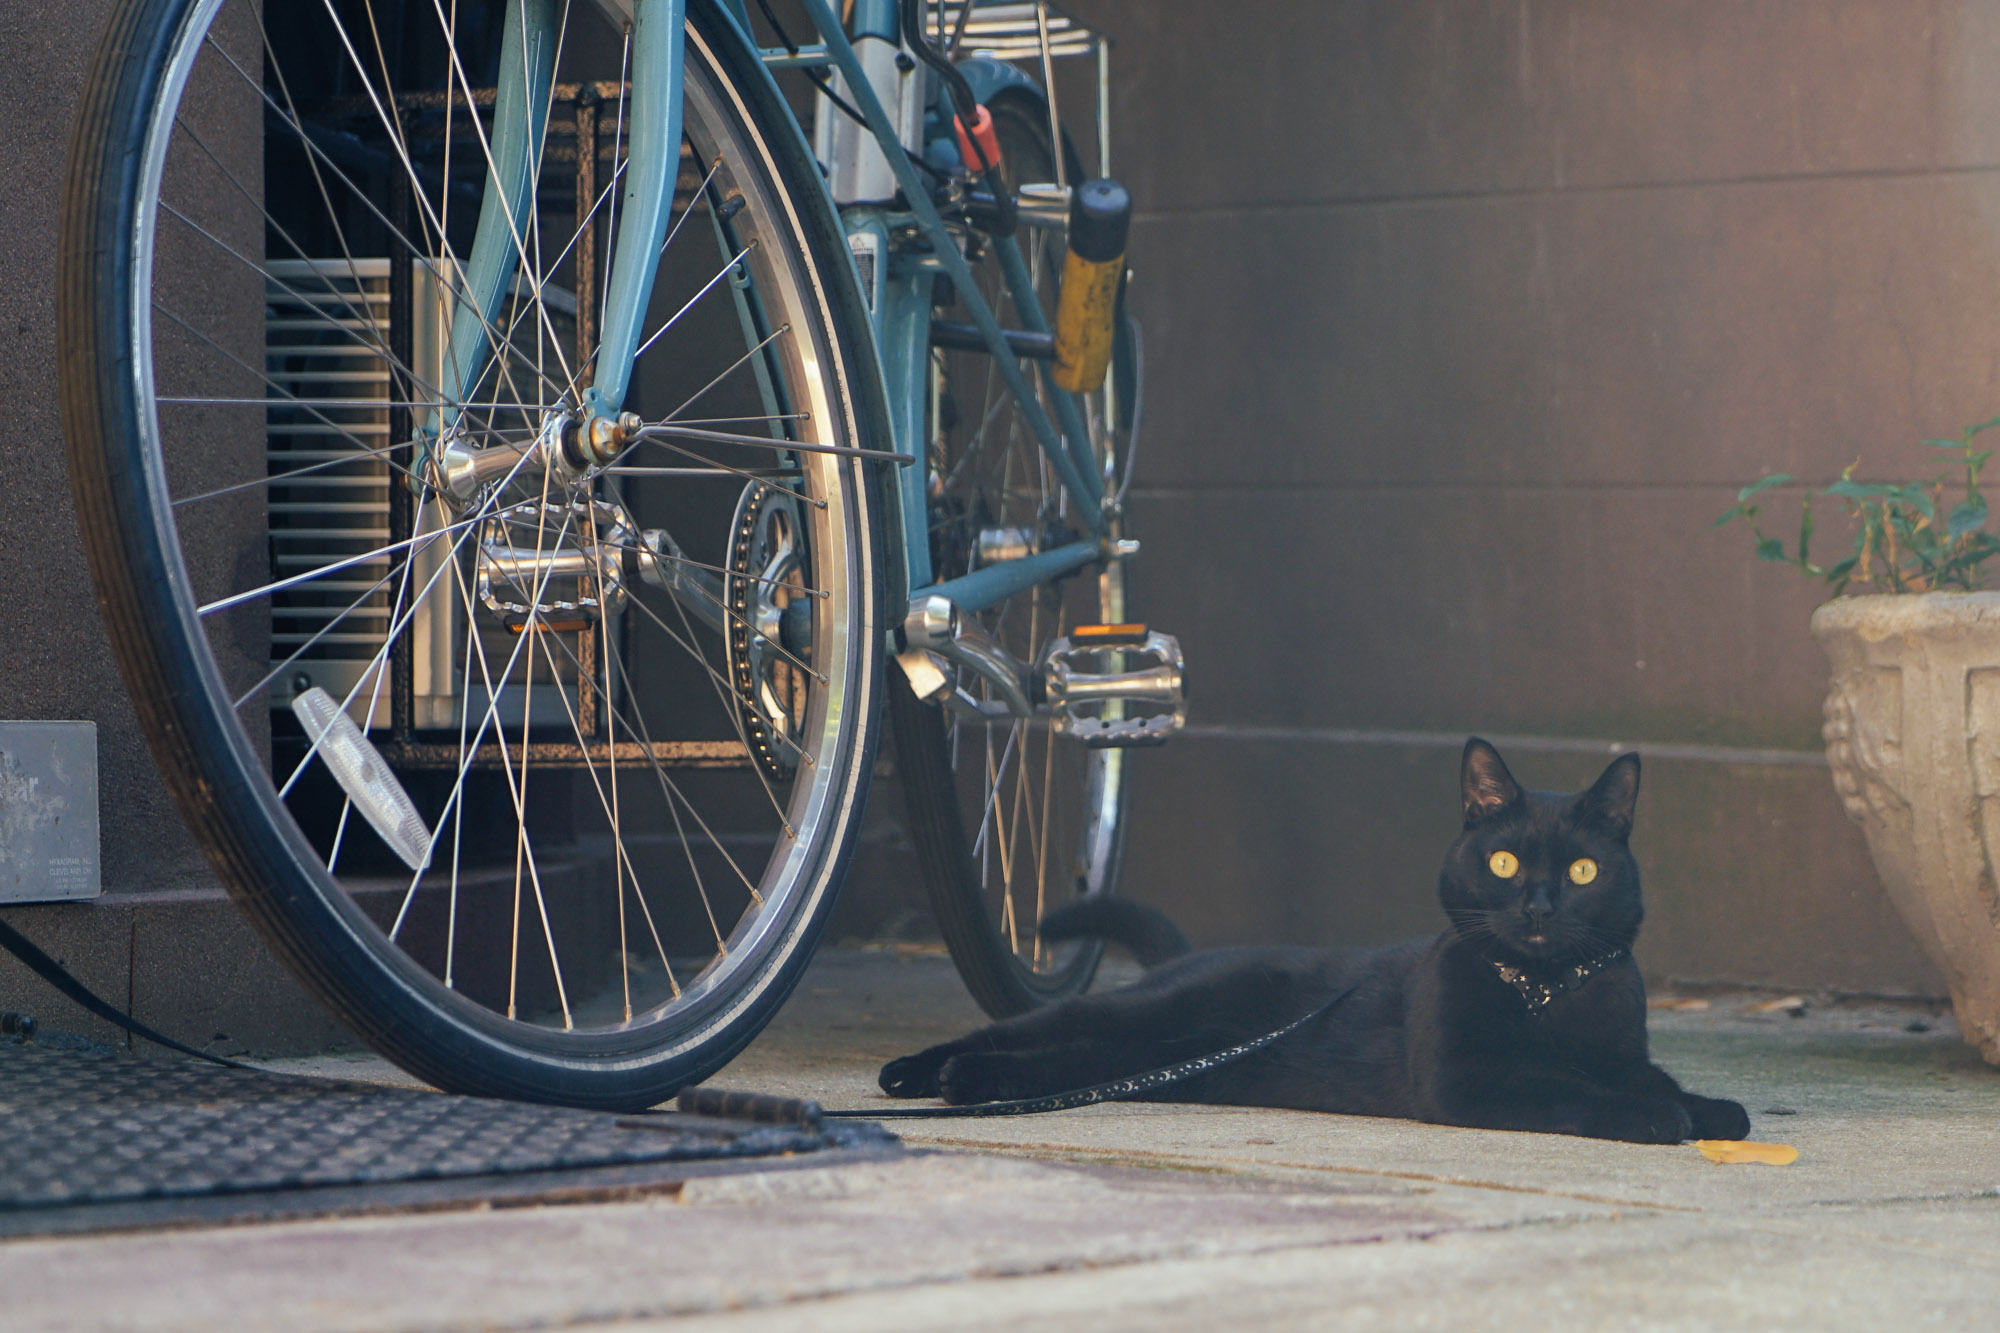 black cat beside bicycle